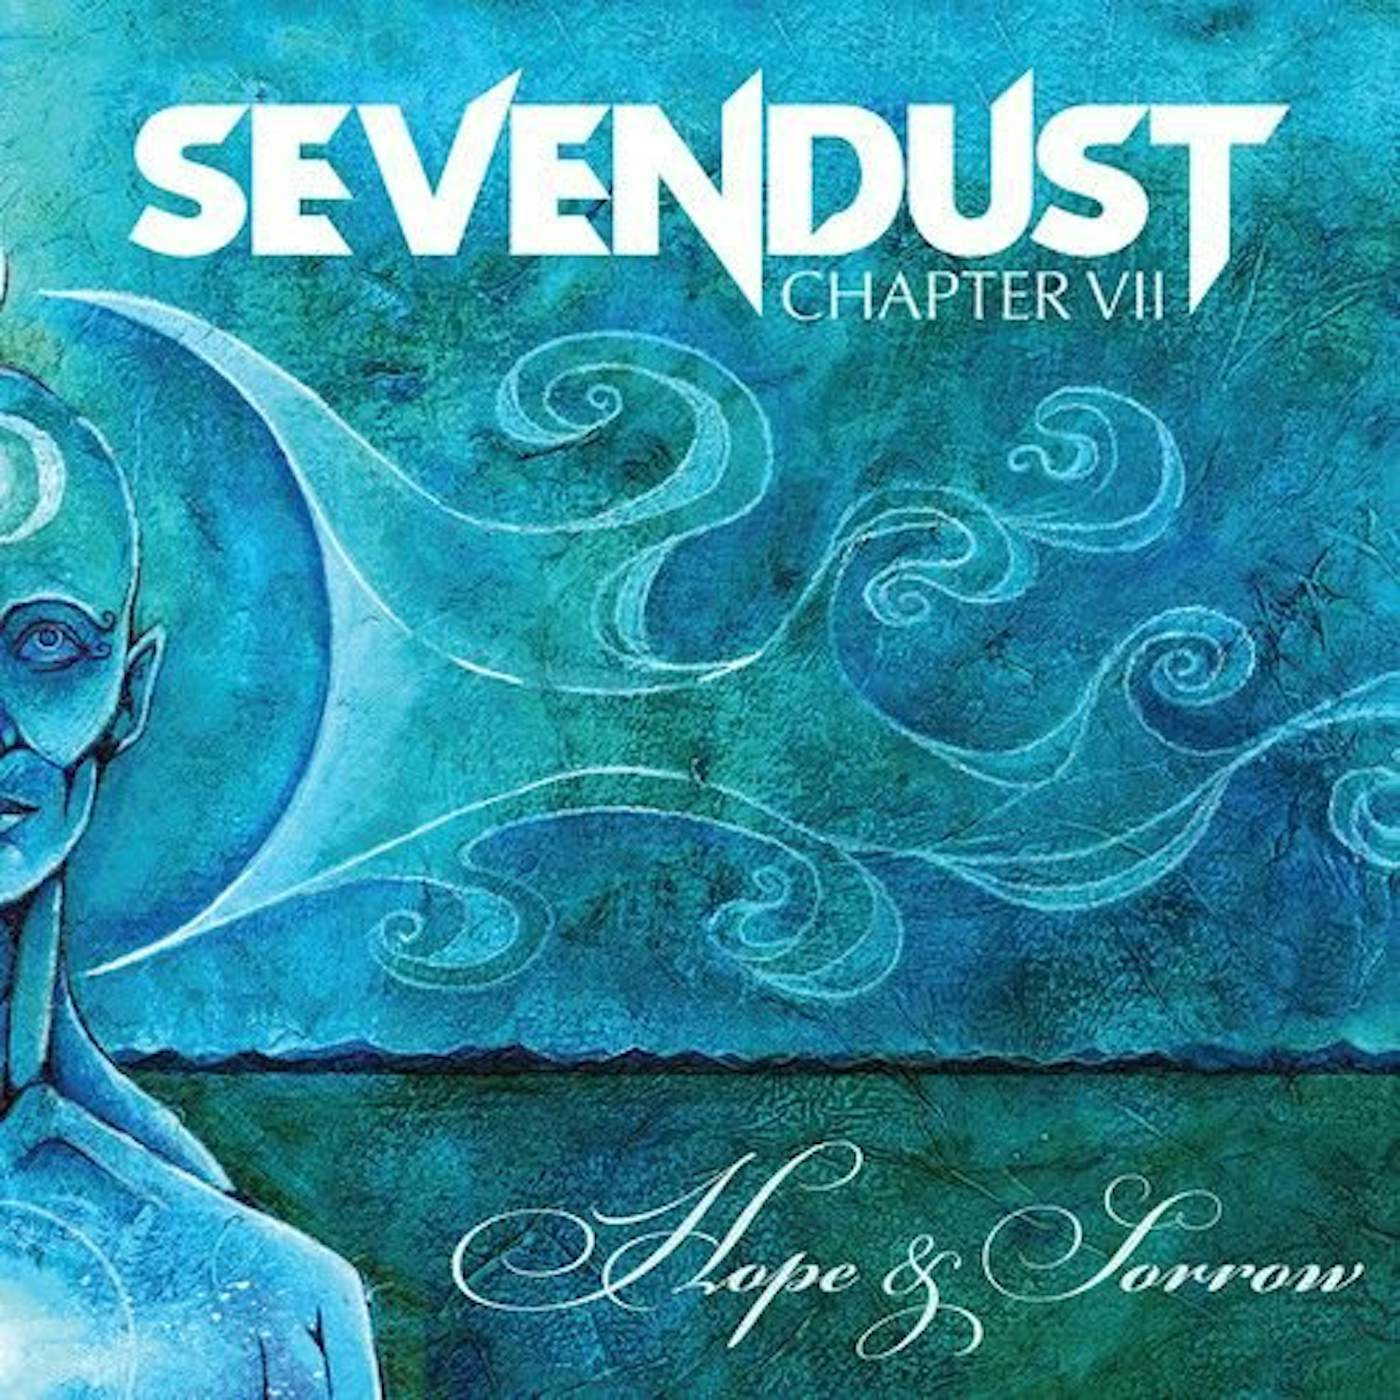 Sevendust Chapter VII: Hope & Sorrow Vinyl Record